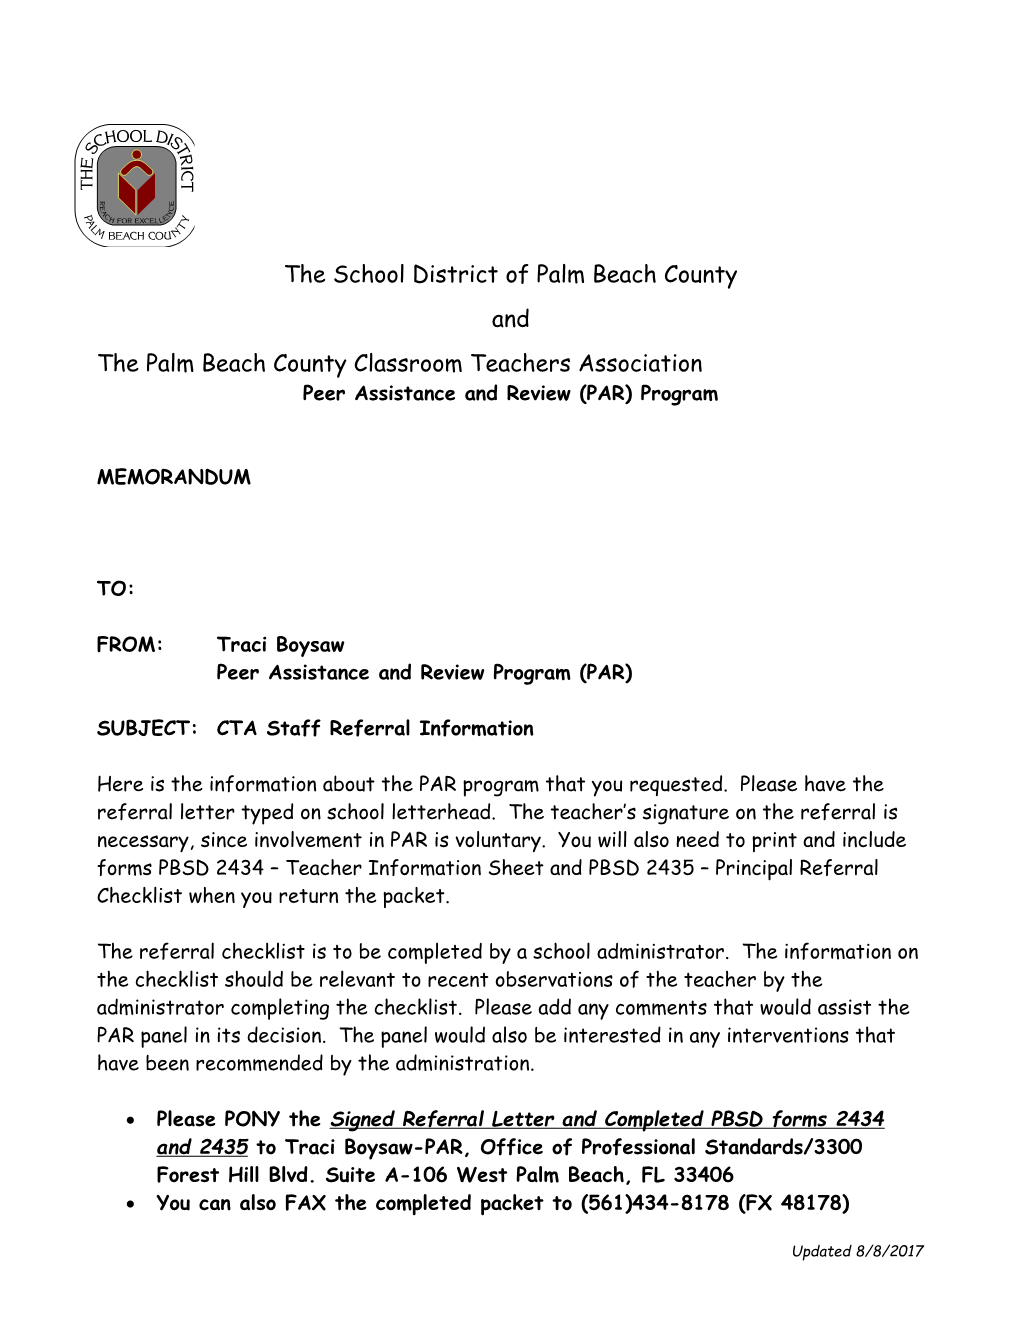 The Palm Beach County Classroom Teachers Association